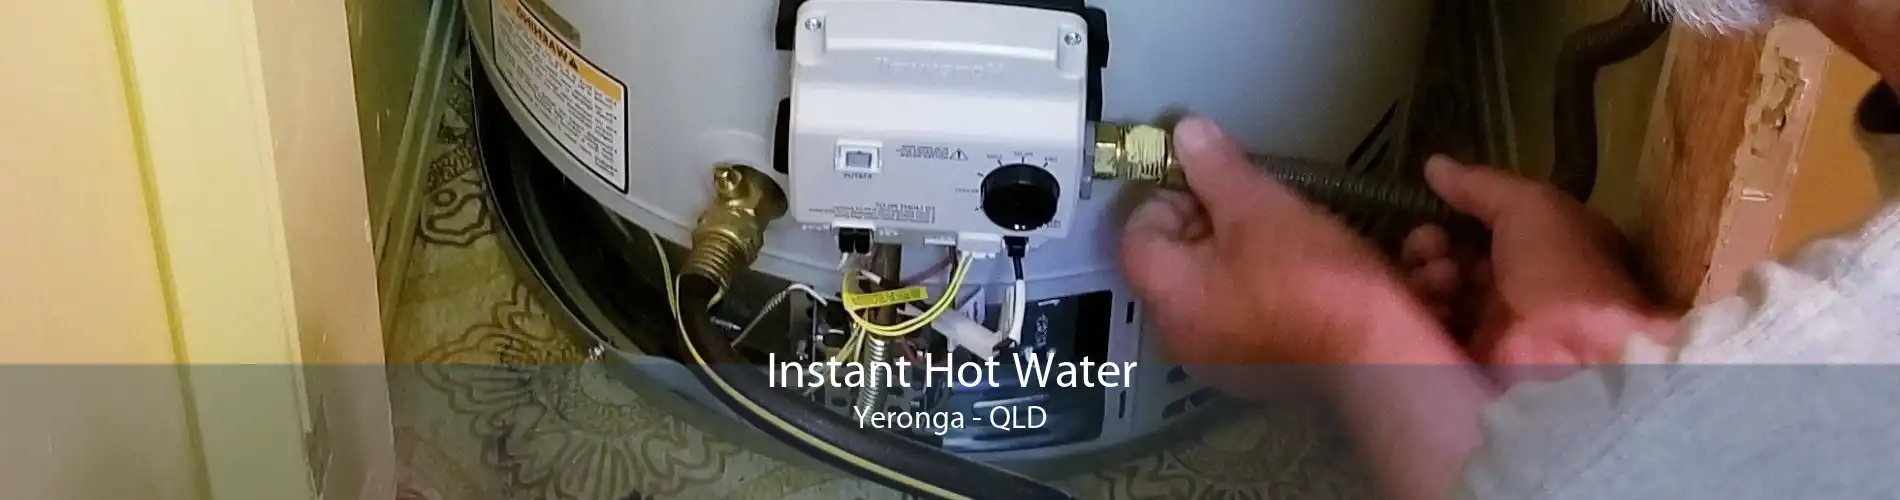 Instant Hot Water Yeronga - QLD